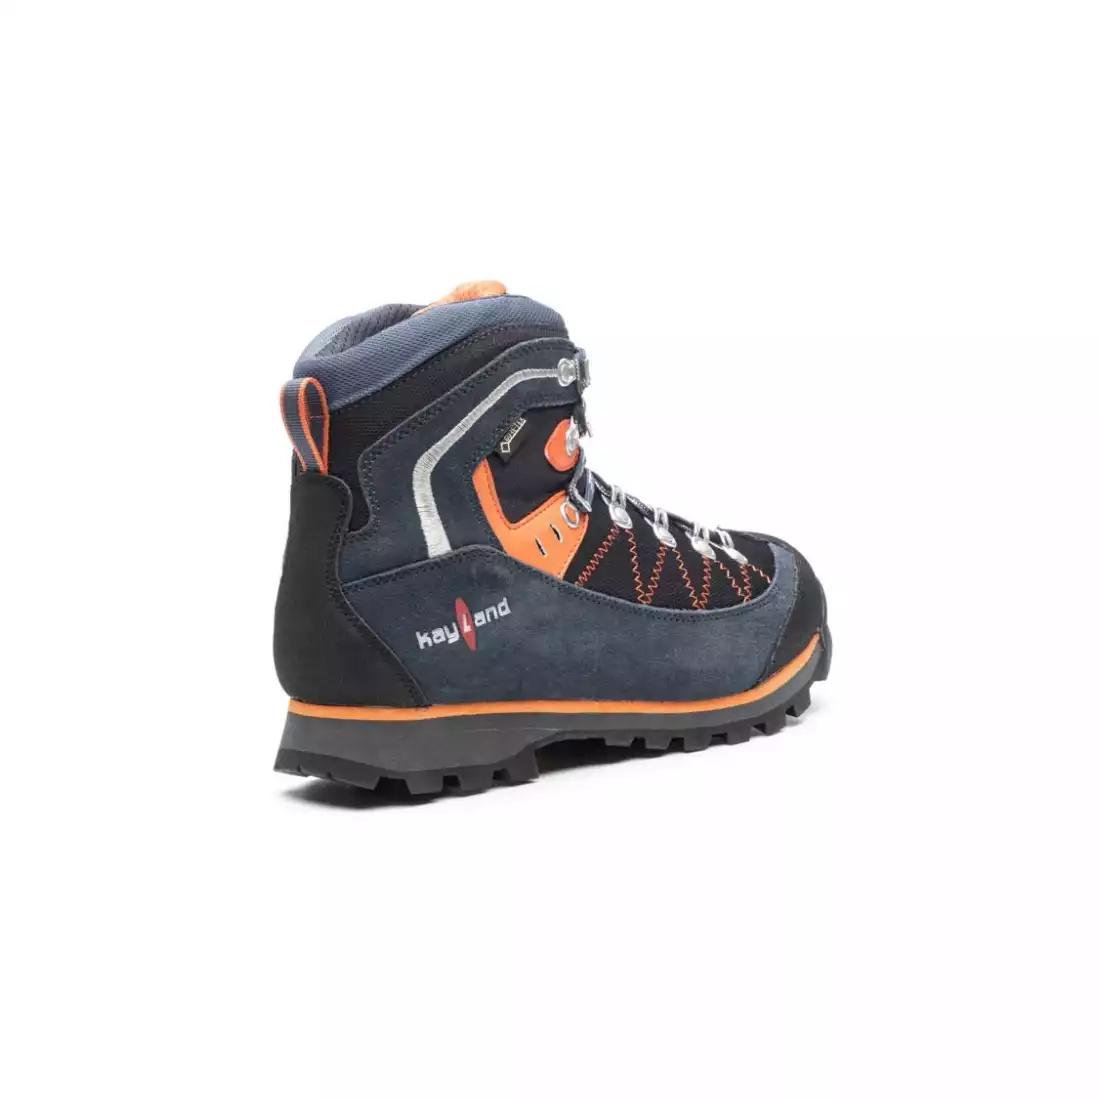 KAYLAND PLUME MICRO GTX Men's trekking shoes, GORE-TEX, VIBRAM, blue-orange